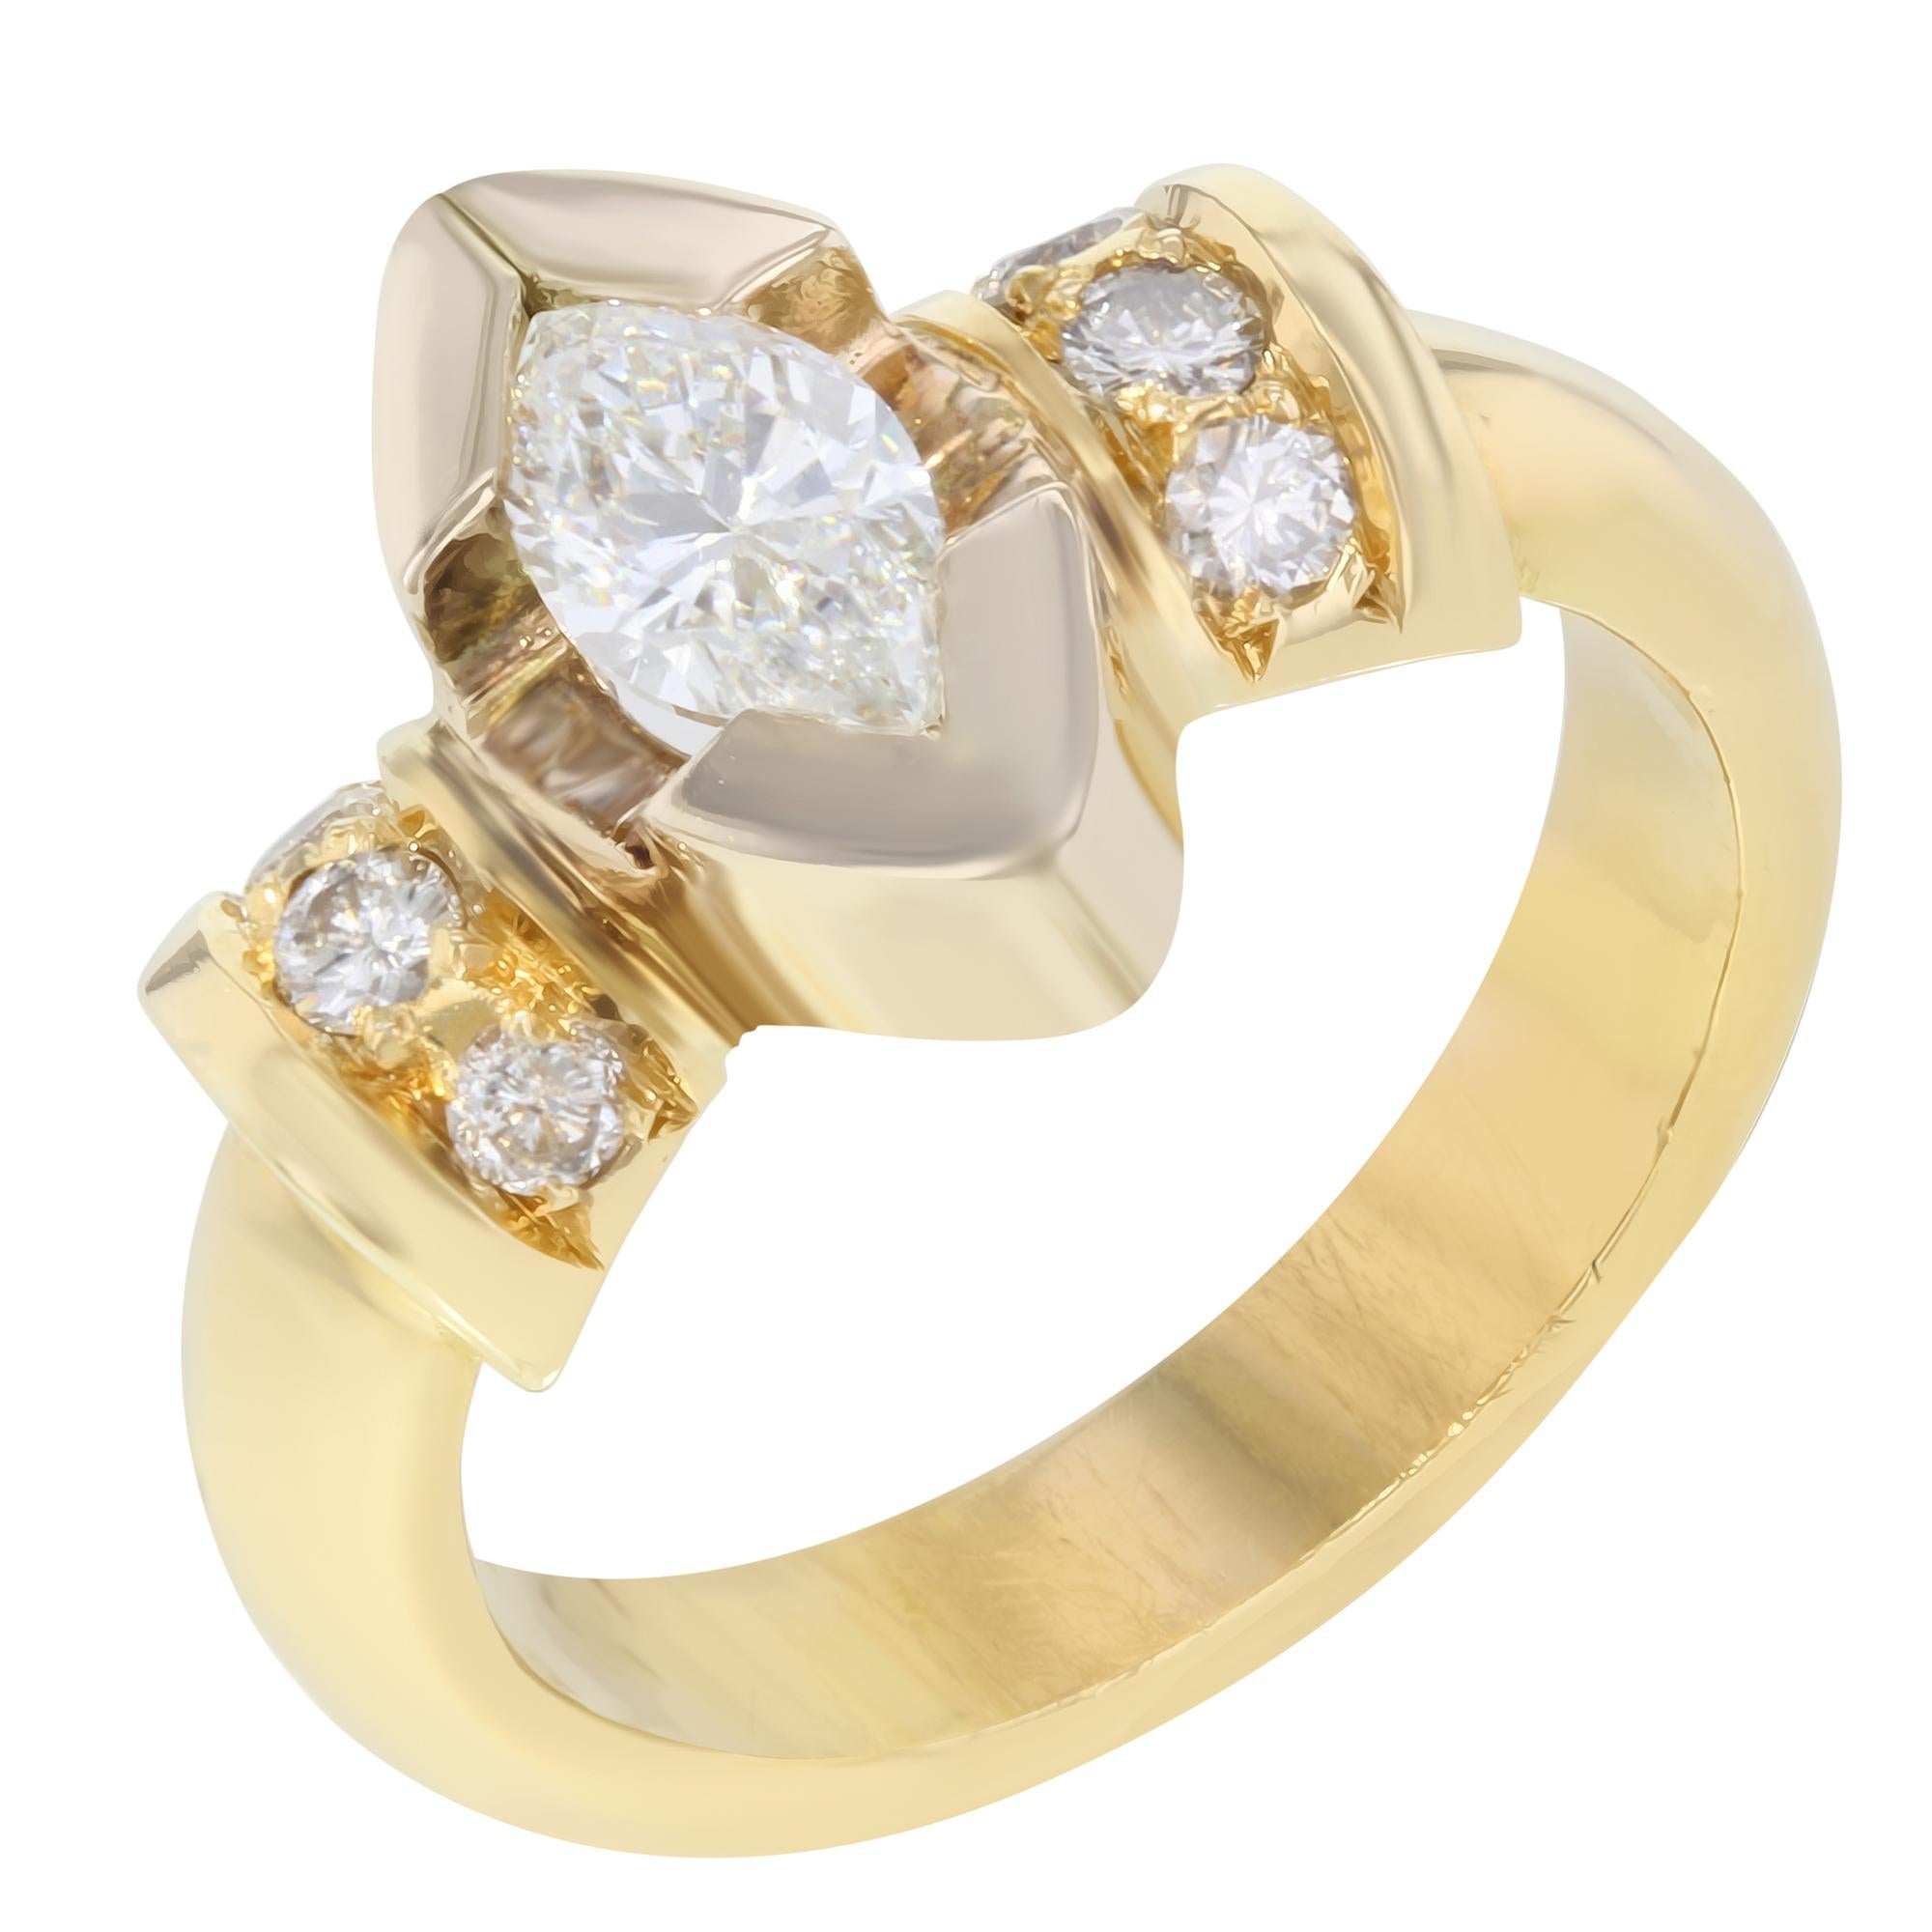 Modern Rachel Koen Marquise Cut Diamond Engagement Ring 18K Yellow Gold 1.06Cttw For Sale